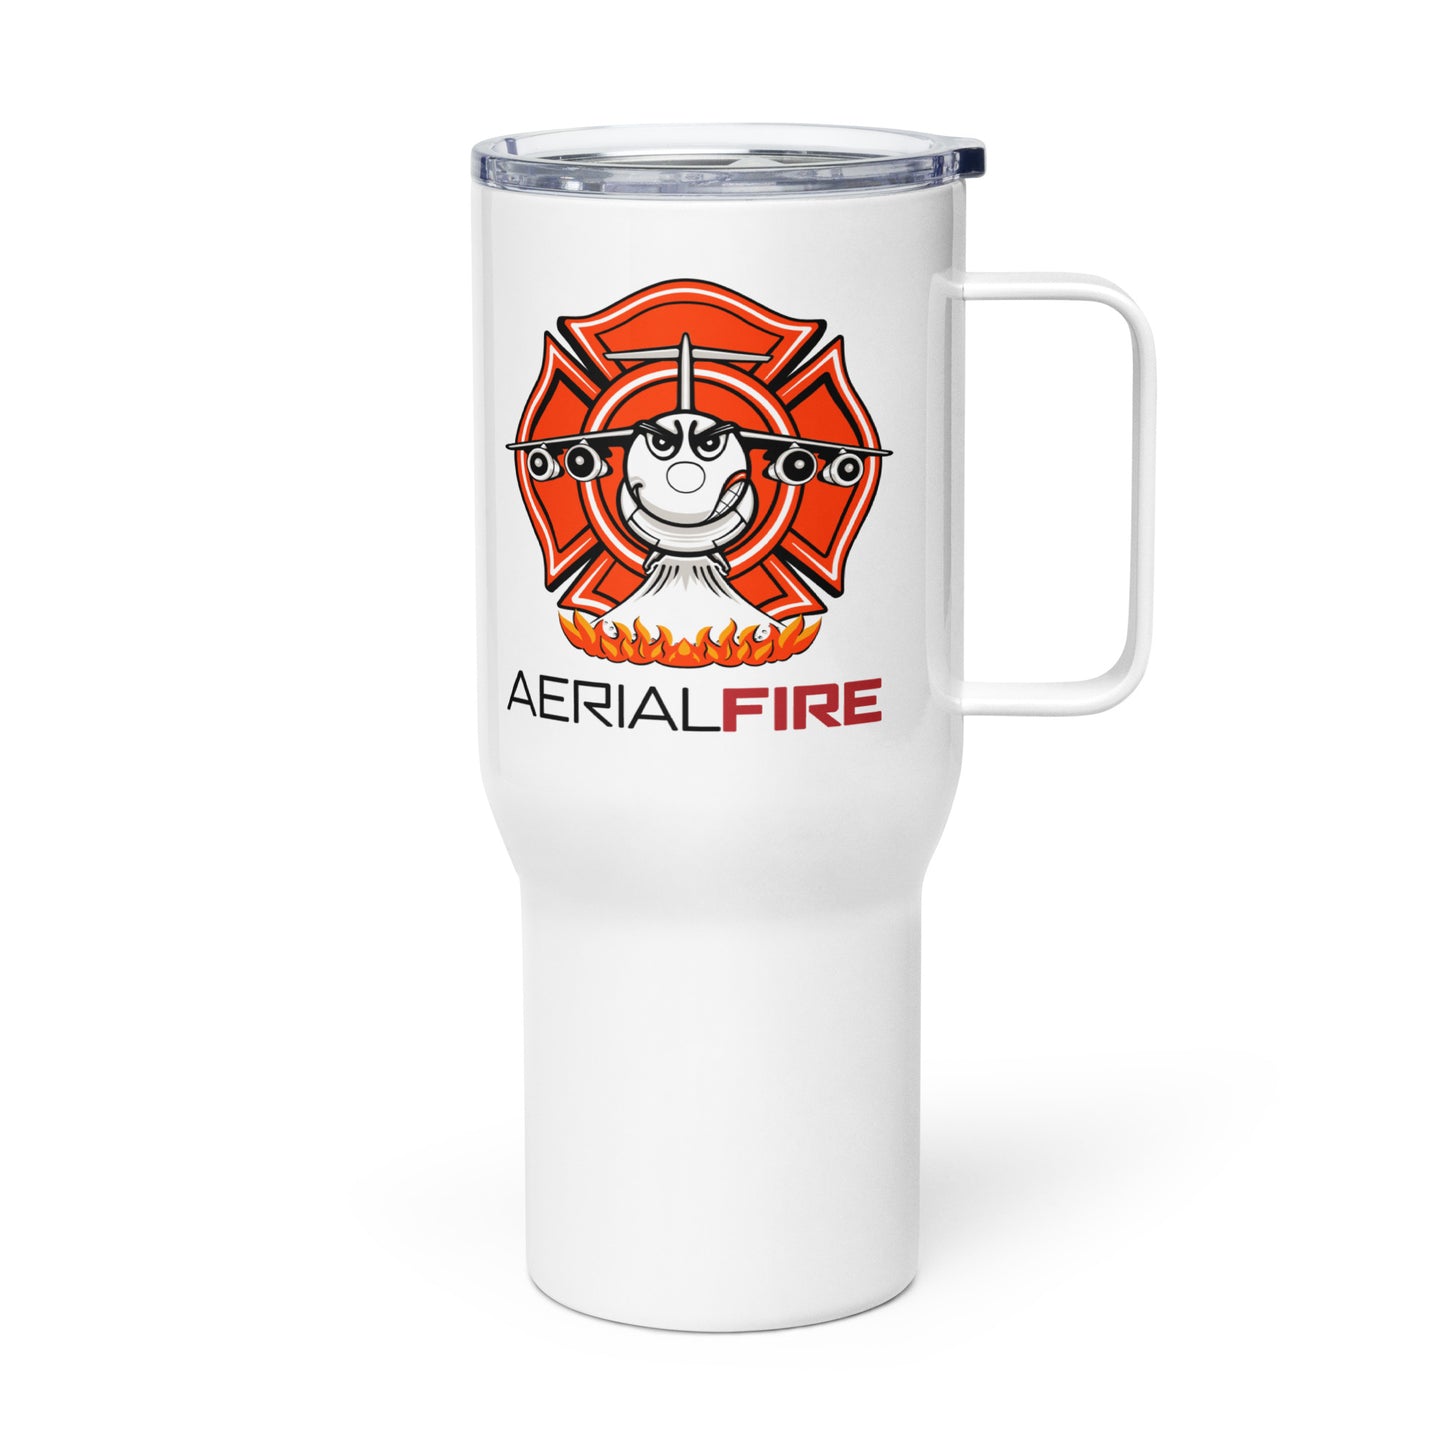 AerialFire BAE146/RJ85 Cartoon Travel mug with a handle